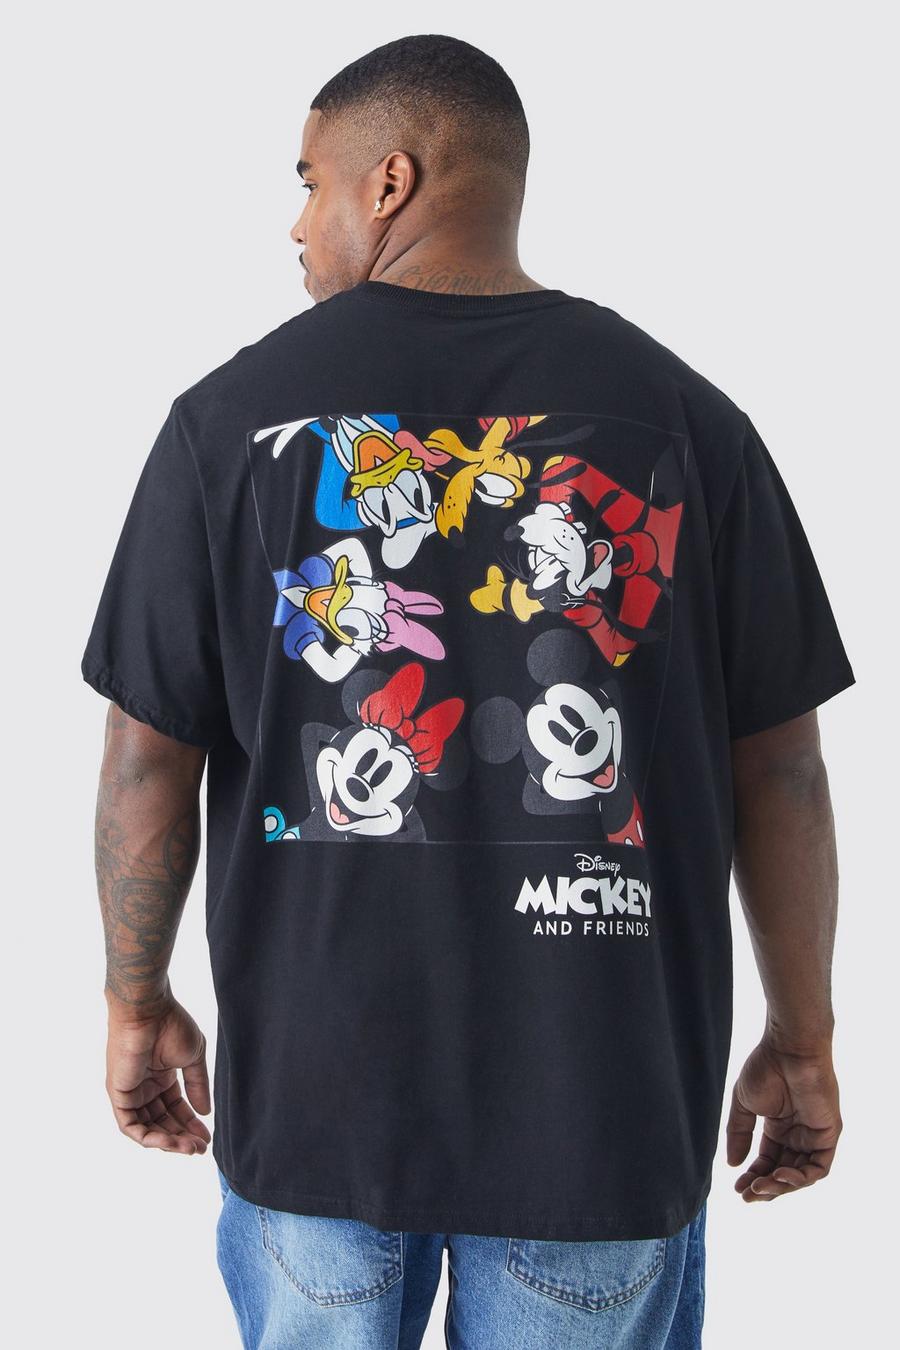 T-shirt Plus Size ufficiale di Mickey Mouse, Black